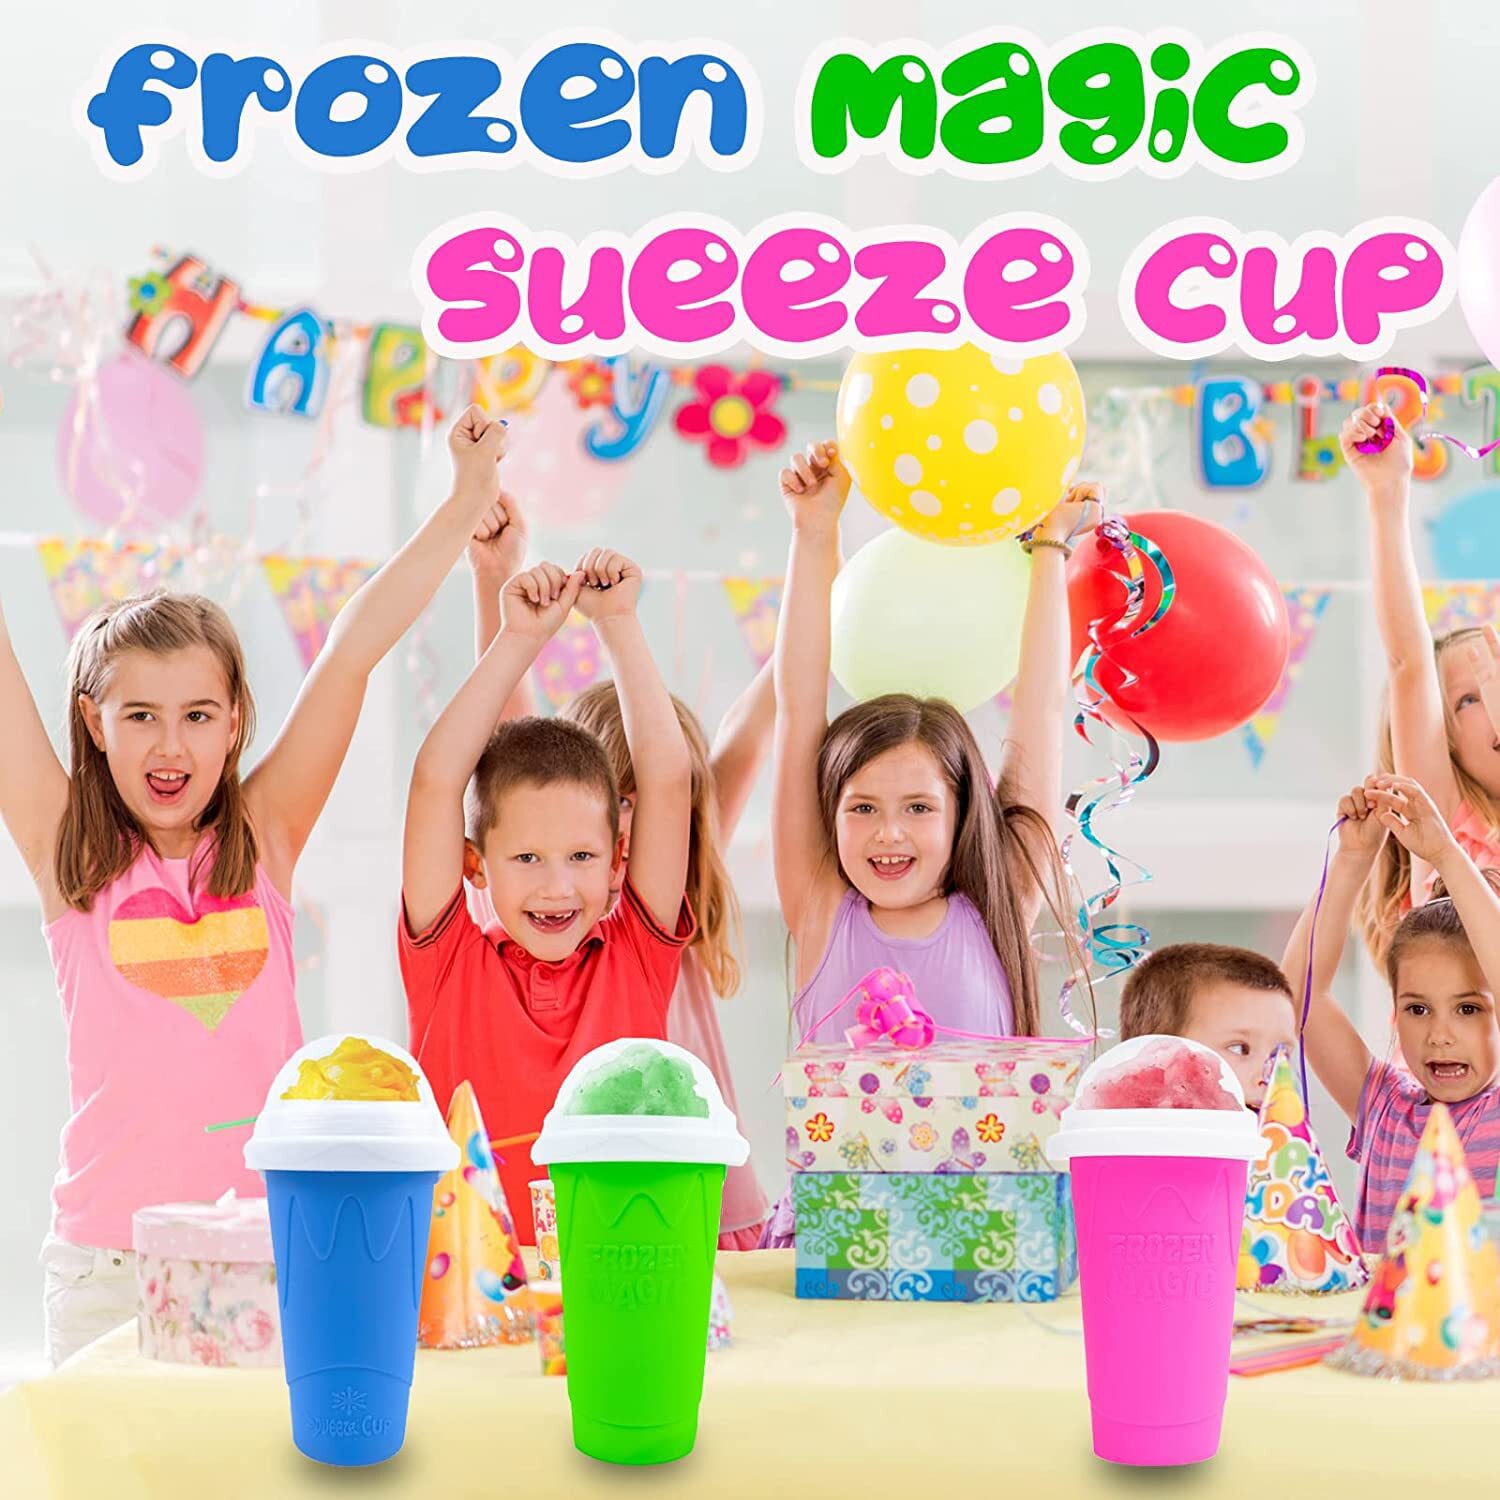  Slushy Cup Slushie Cup Slushy Maker Cup Frozen Magic Squeeze Cup  Tiktok Slushie Cups,Slush Maker Cup Homemade DIY Slushie Maker Cup Quick  Slushee Cup Cool Cup Milk Shake,Smoothies (pink): Home 